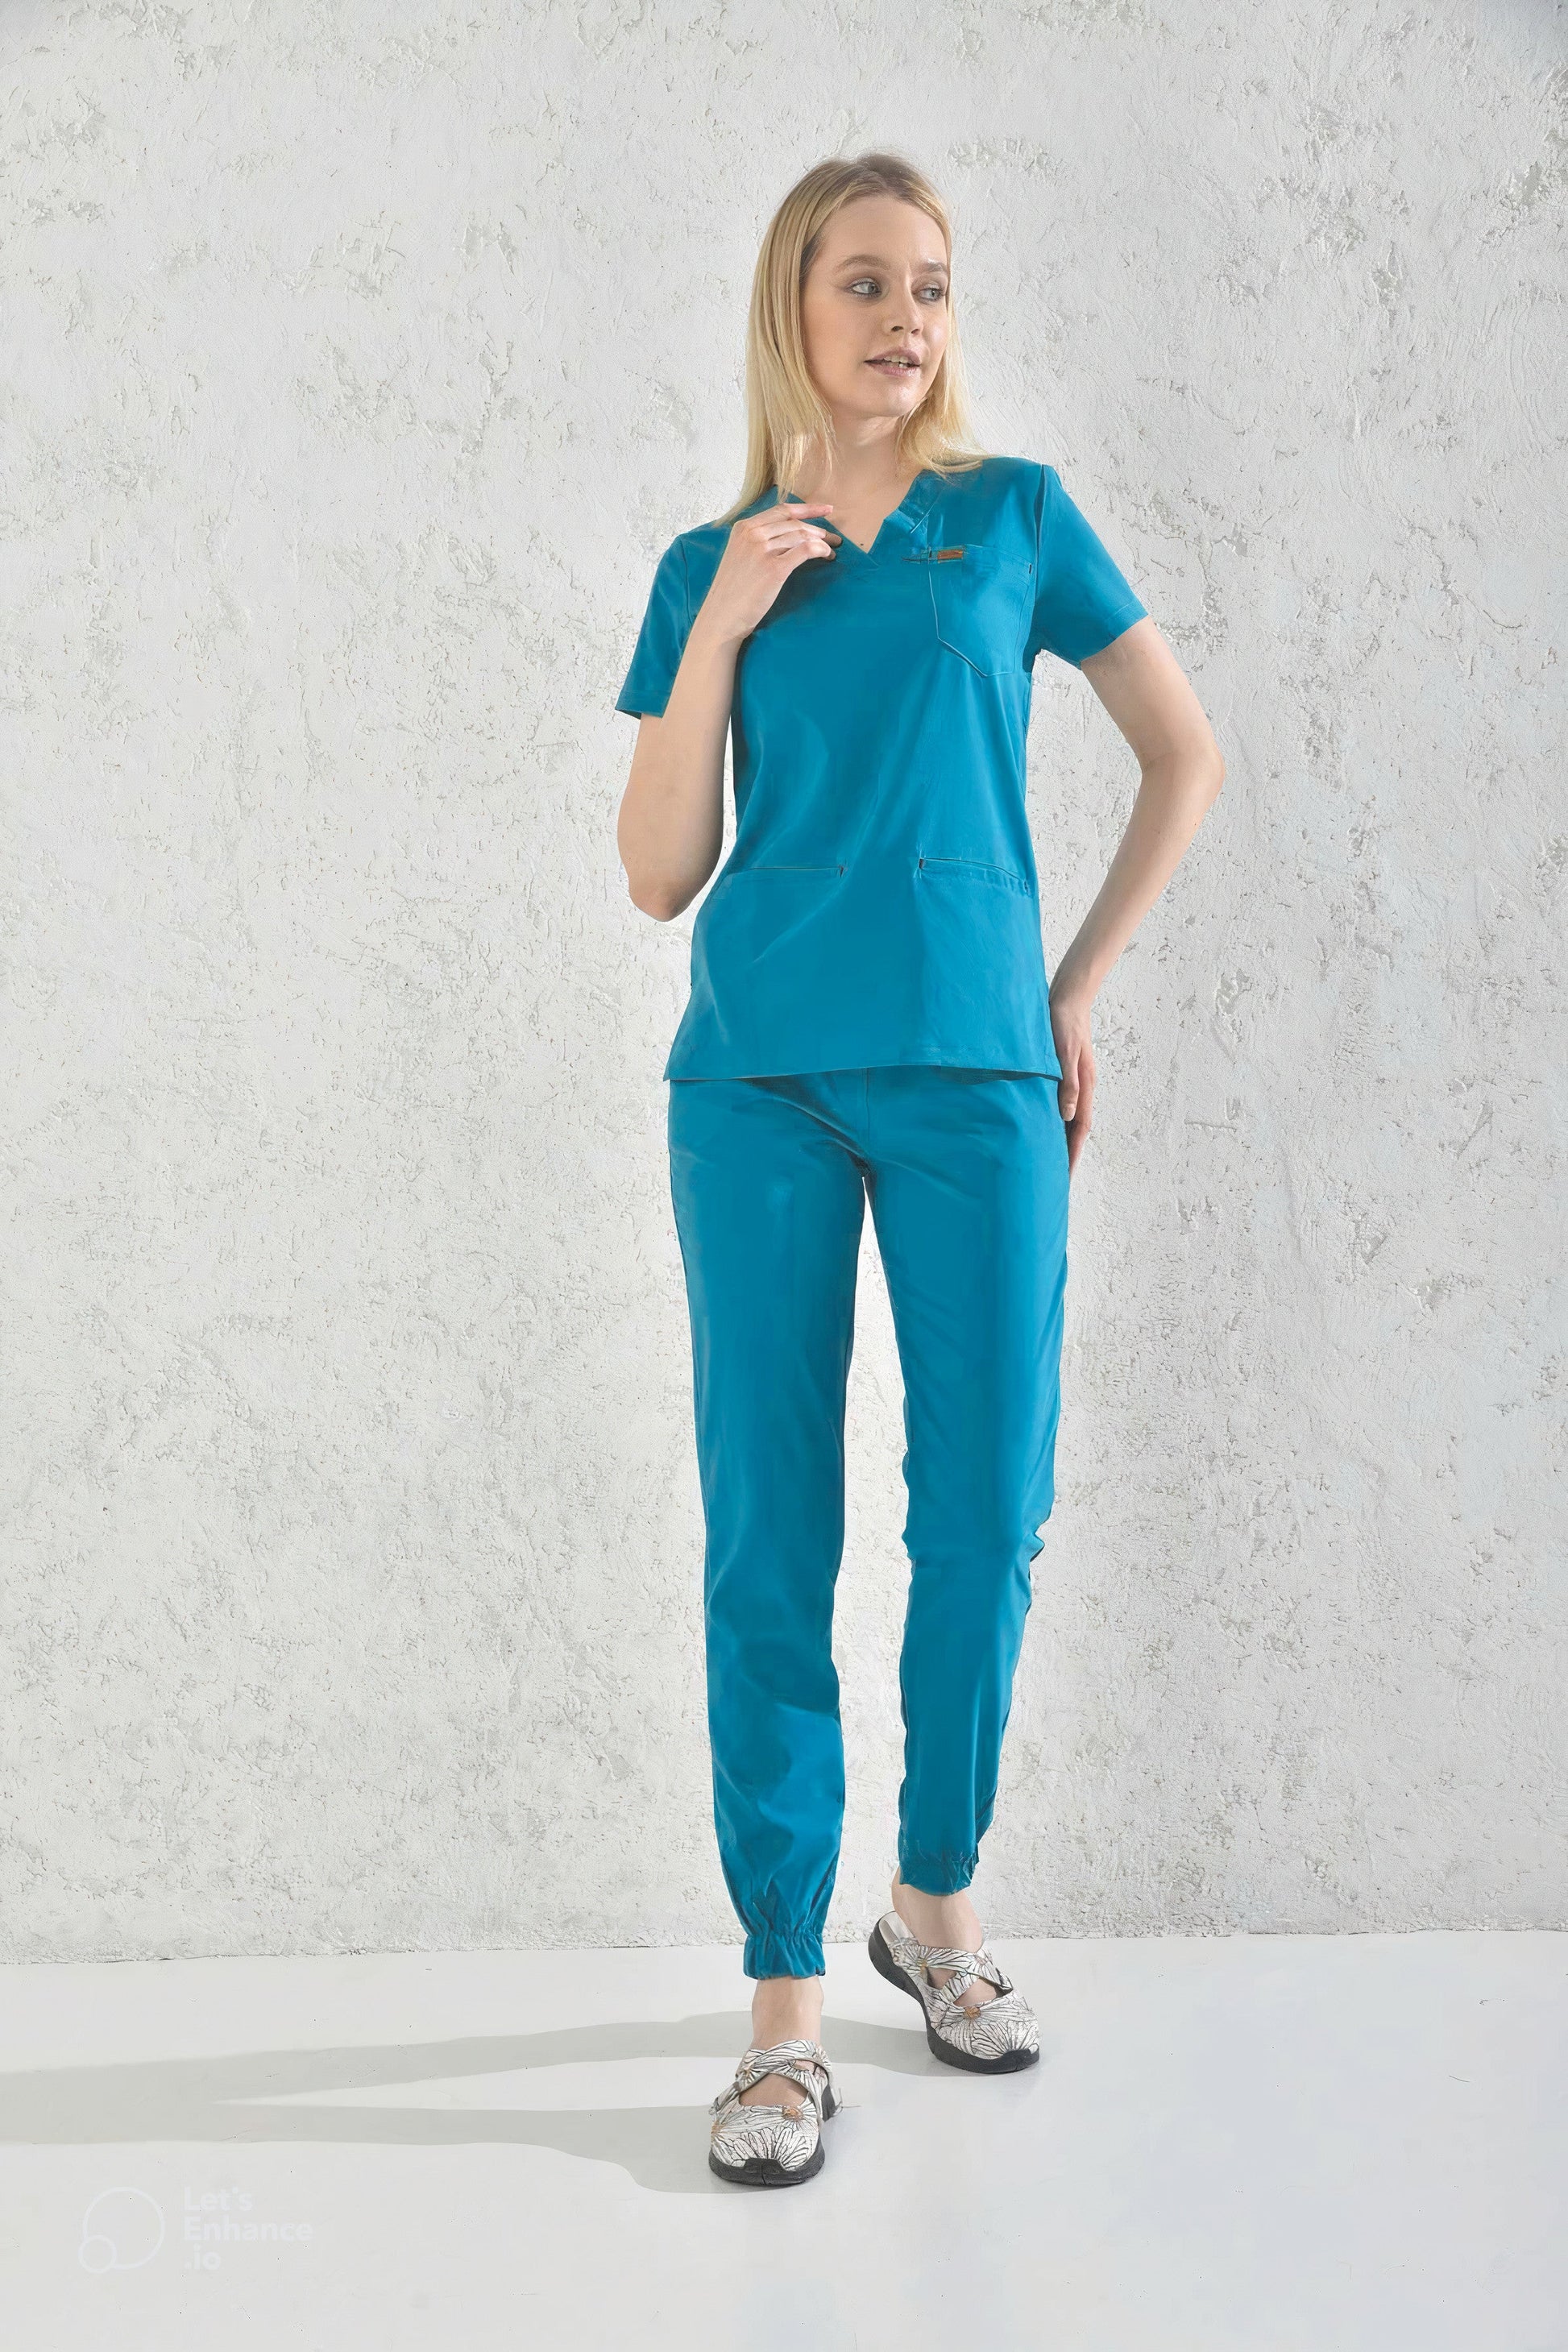 Femme en uniforme médical Slimfit - dune blouse et dun pantalon bleu cyan